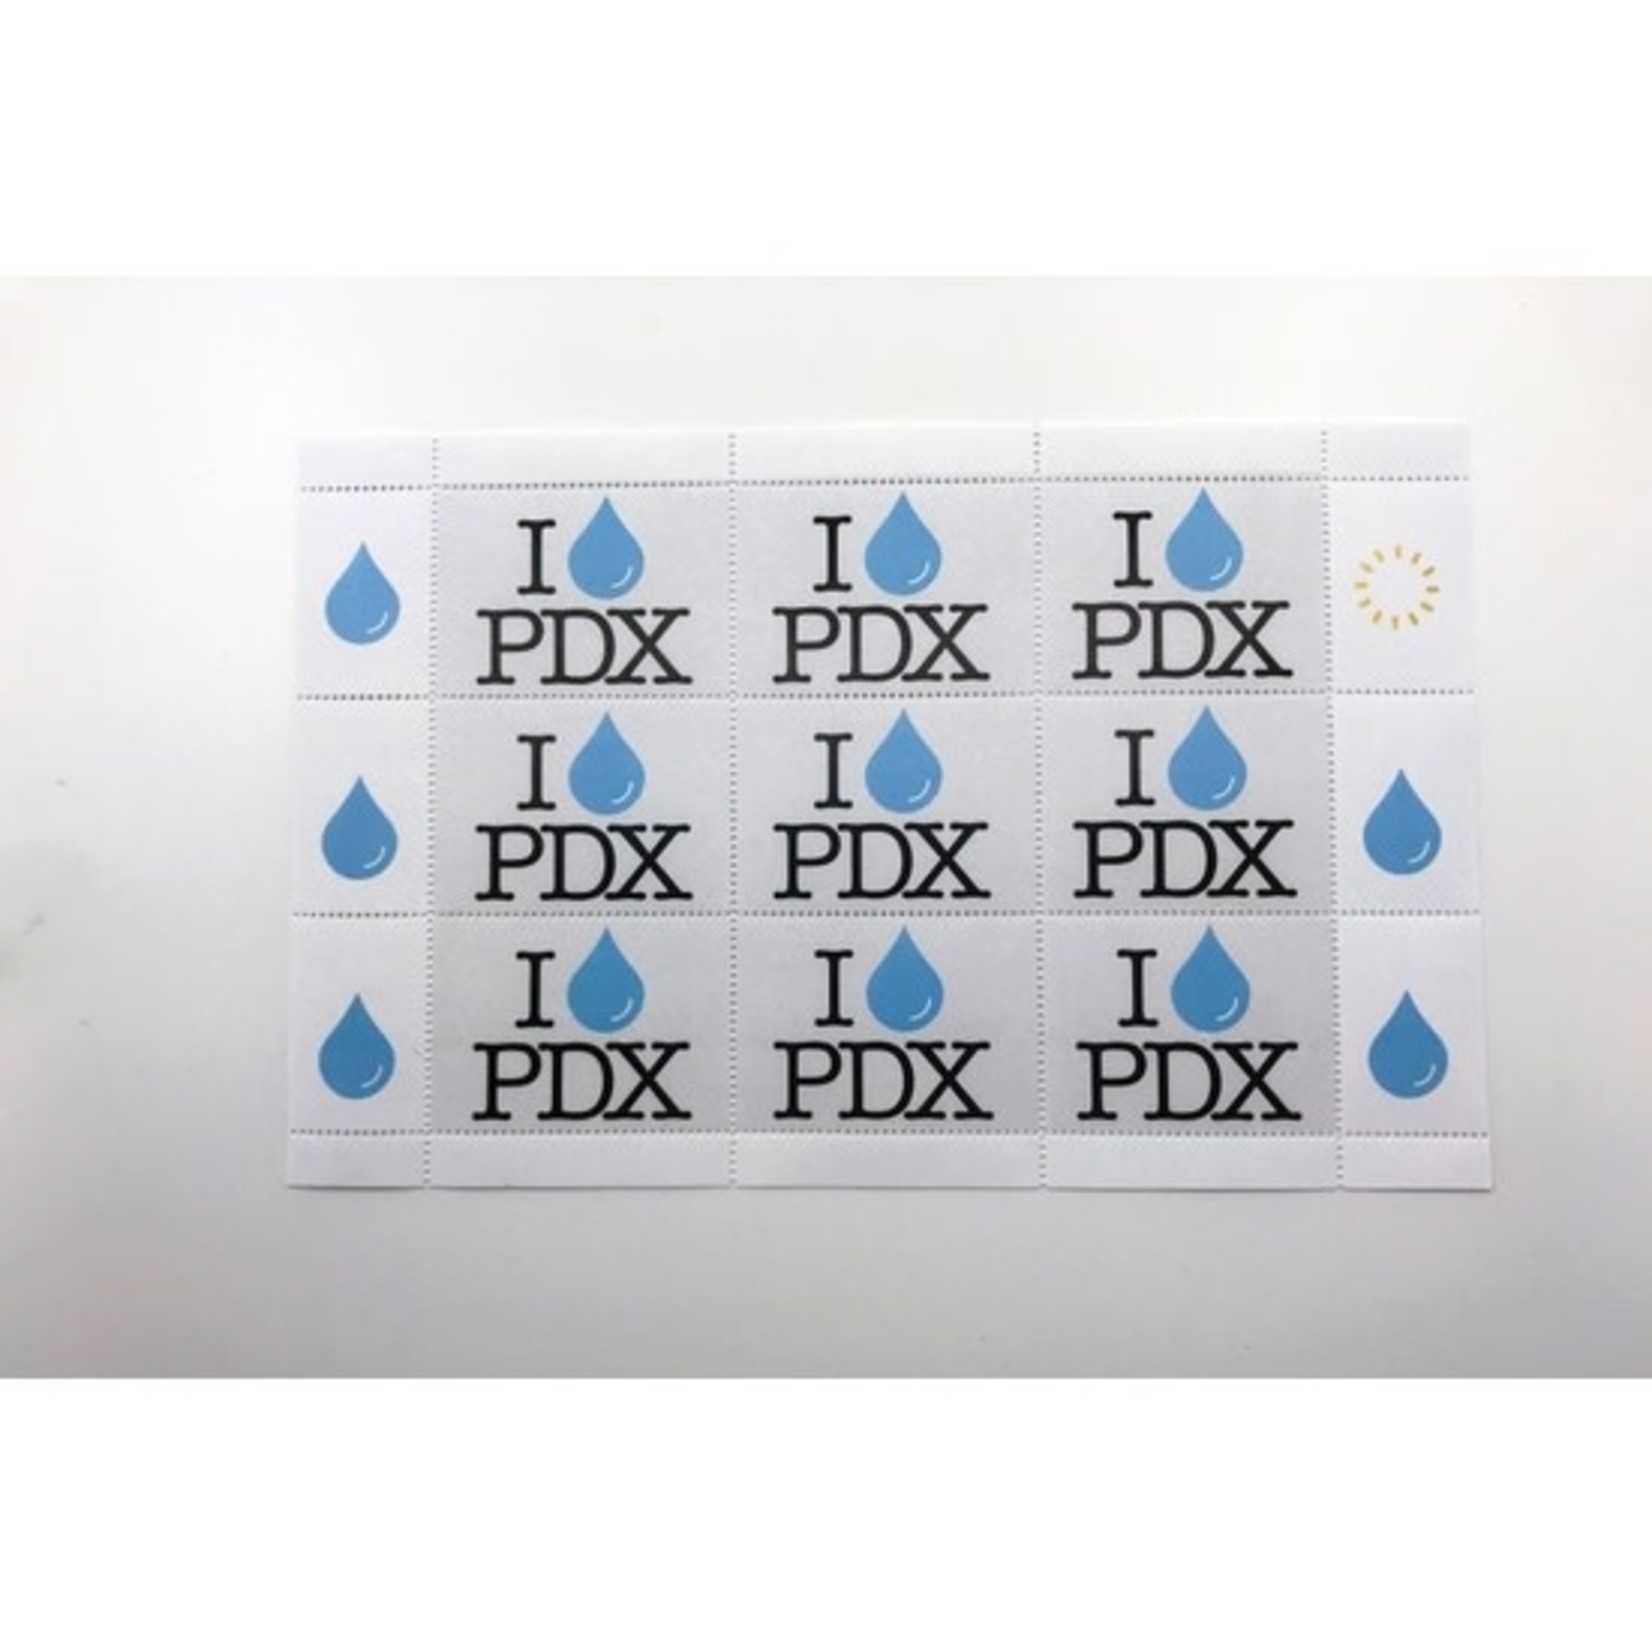 Notions I Raindrop PDX Stamp Sheet FINAL SALE